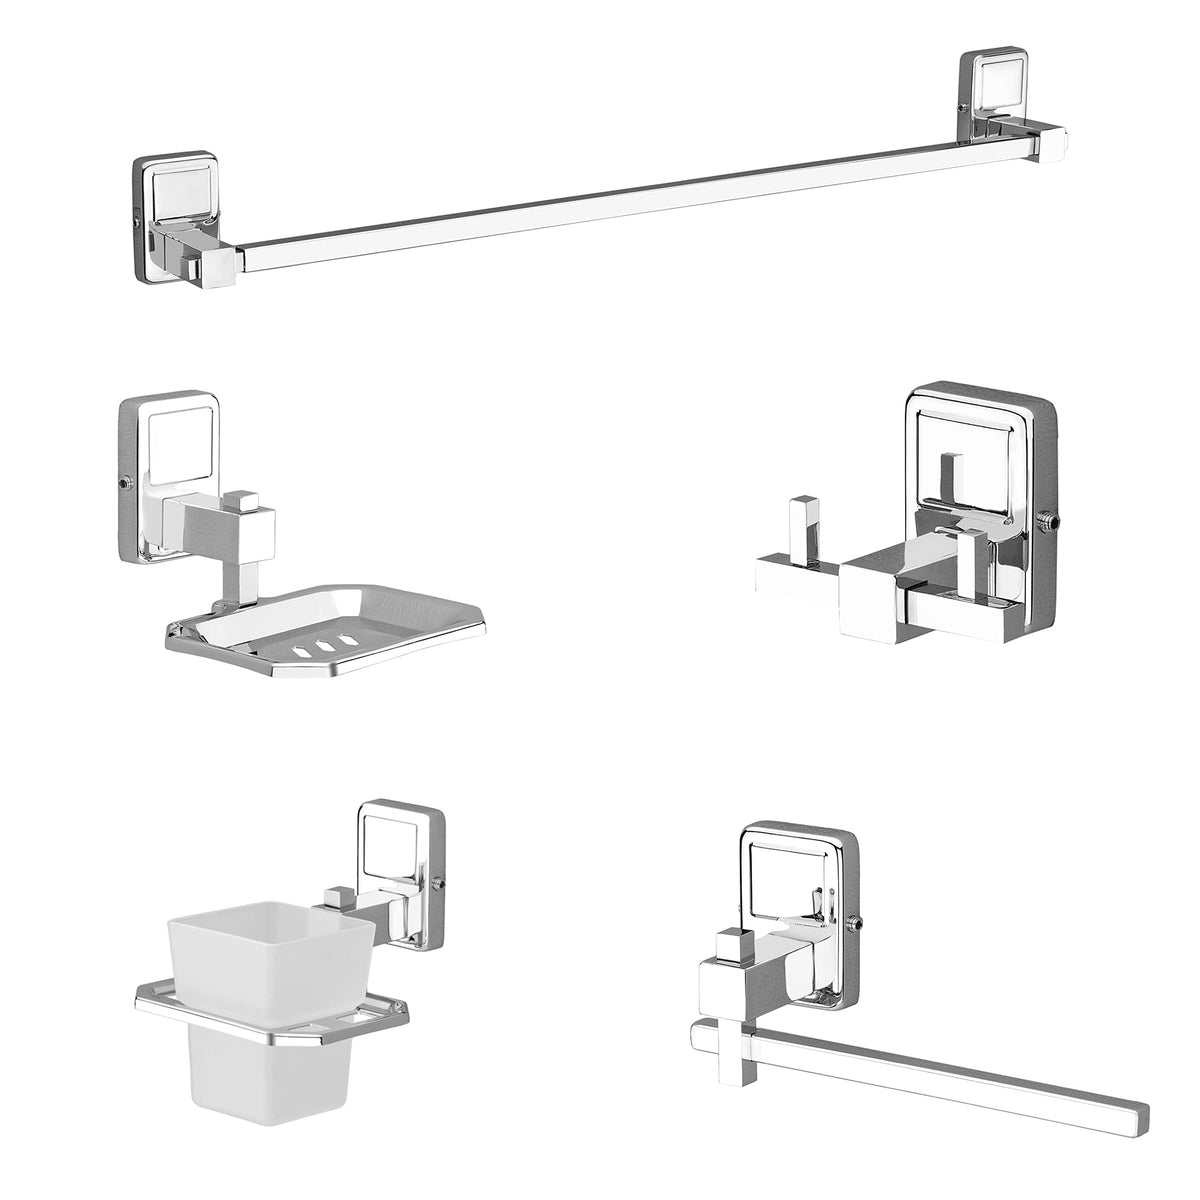 Plantex Stainless Steel 304 Grade Bathroom Accessories Set / Bathroom Hanger for Towel / Towel Bar / Napkin Ring / Tumbler Holder / Soap Dish / Robe Hook (Darcy - Pack of 5)